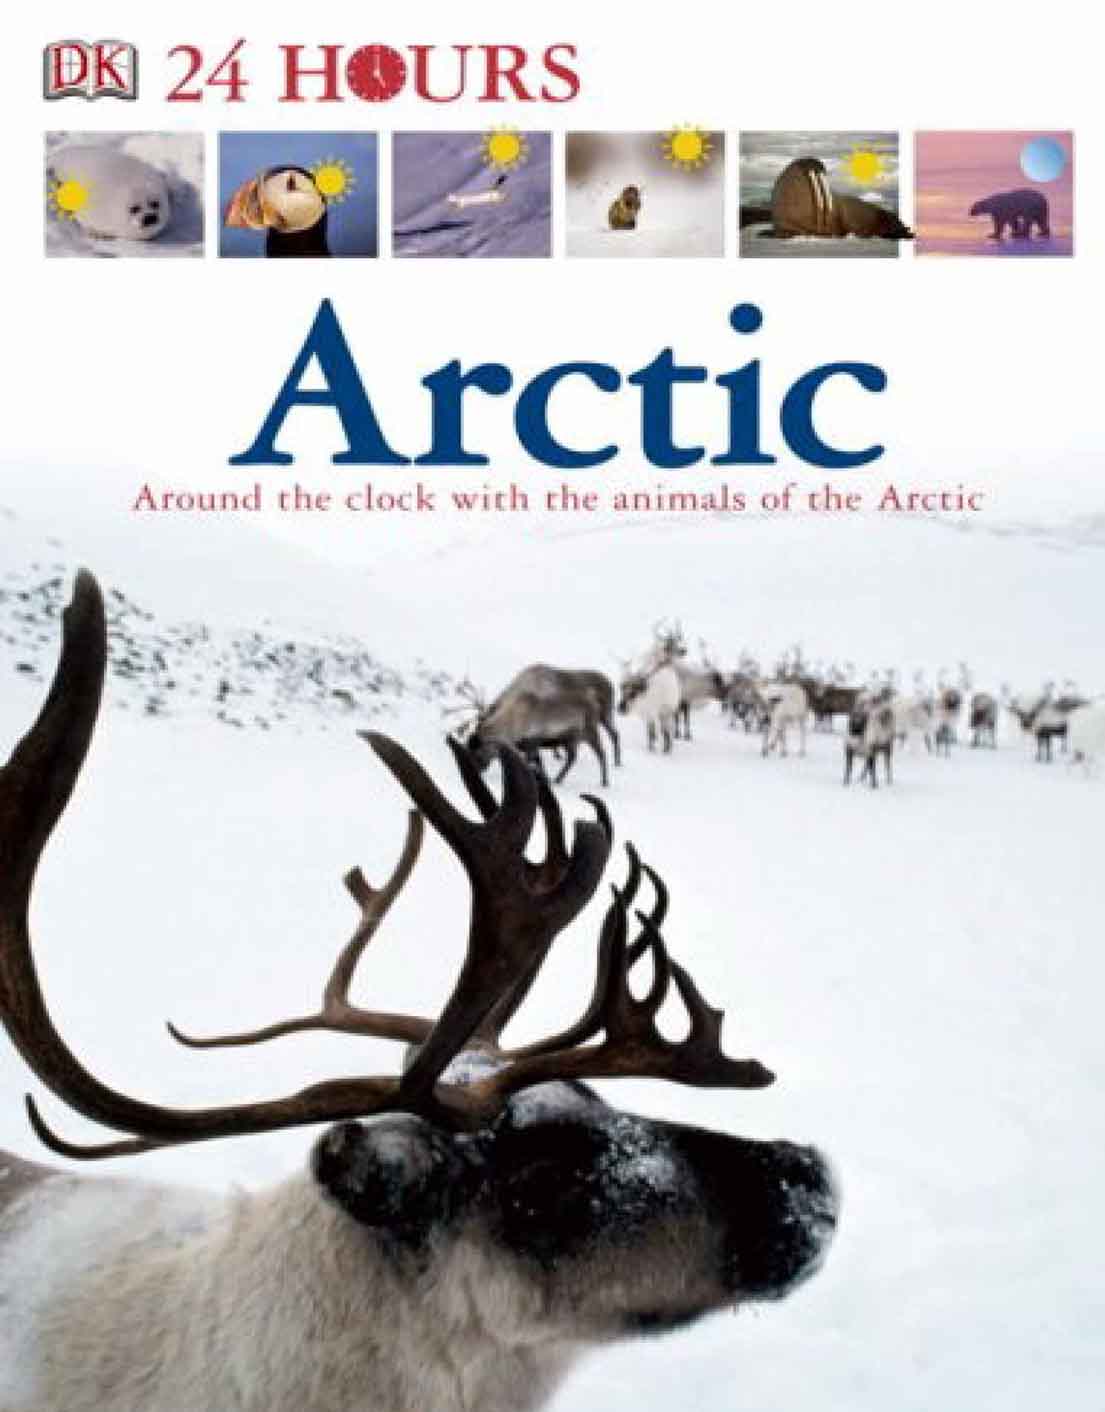 DK.PUBLISHING ARCTIC